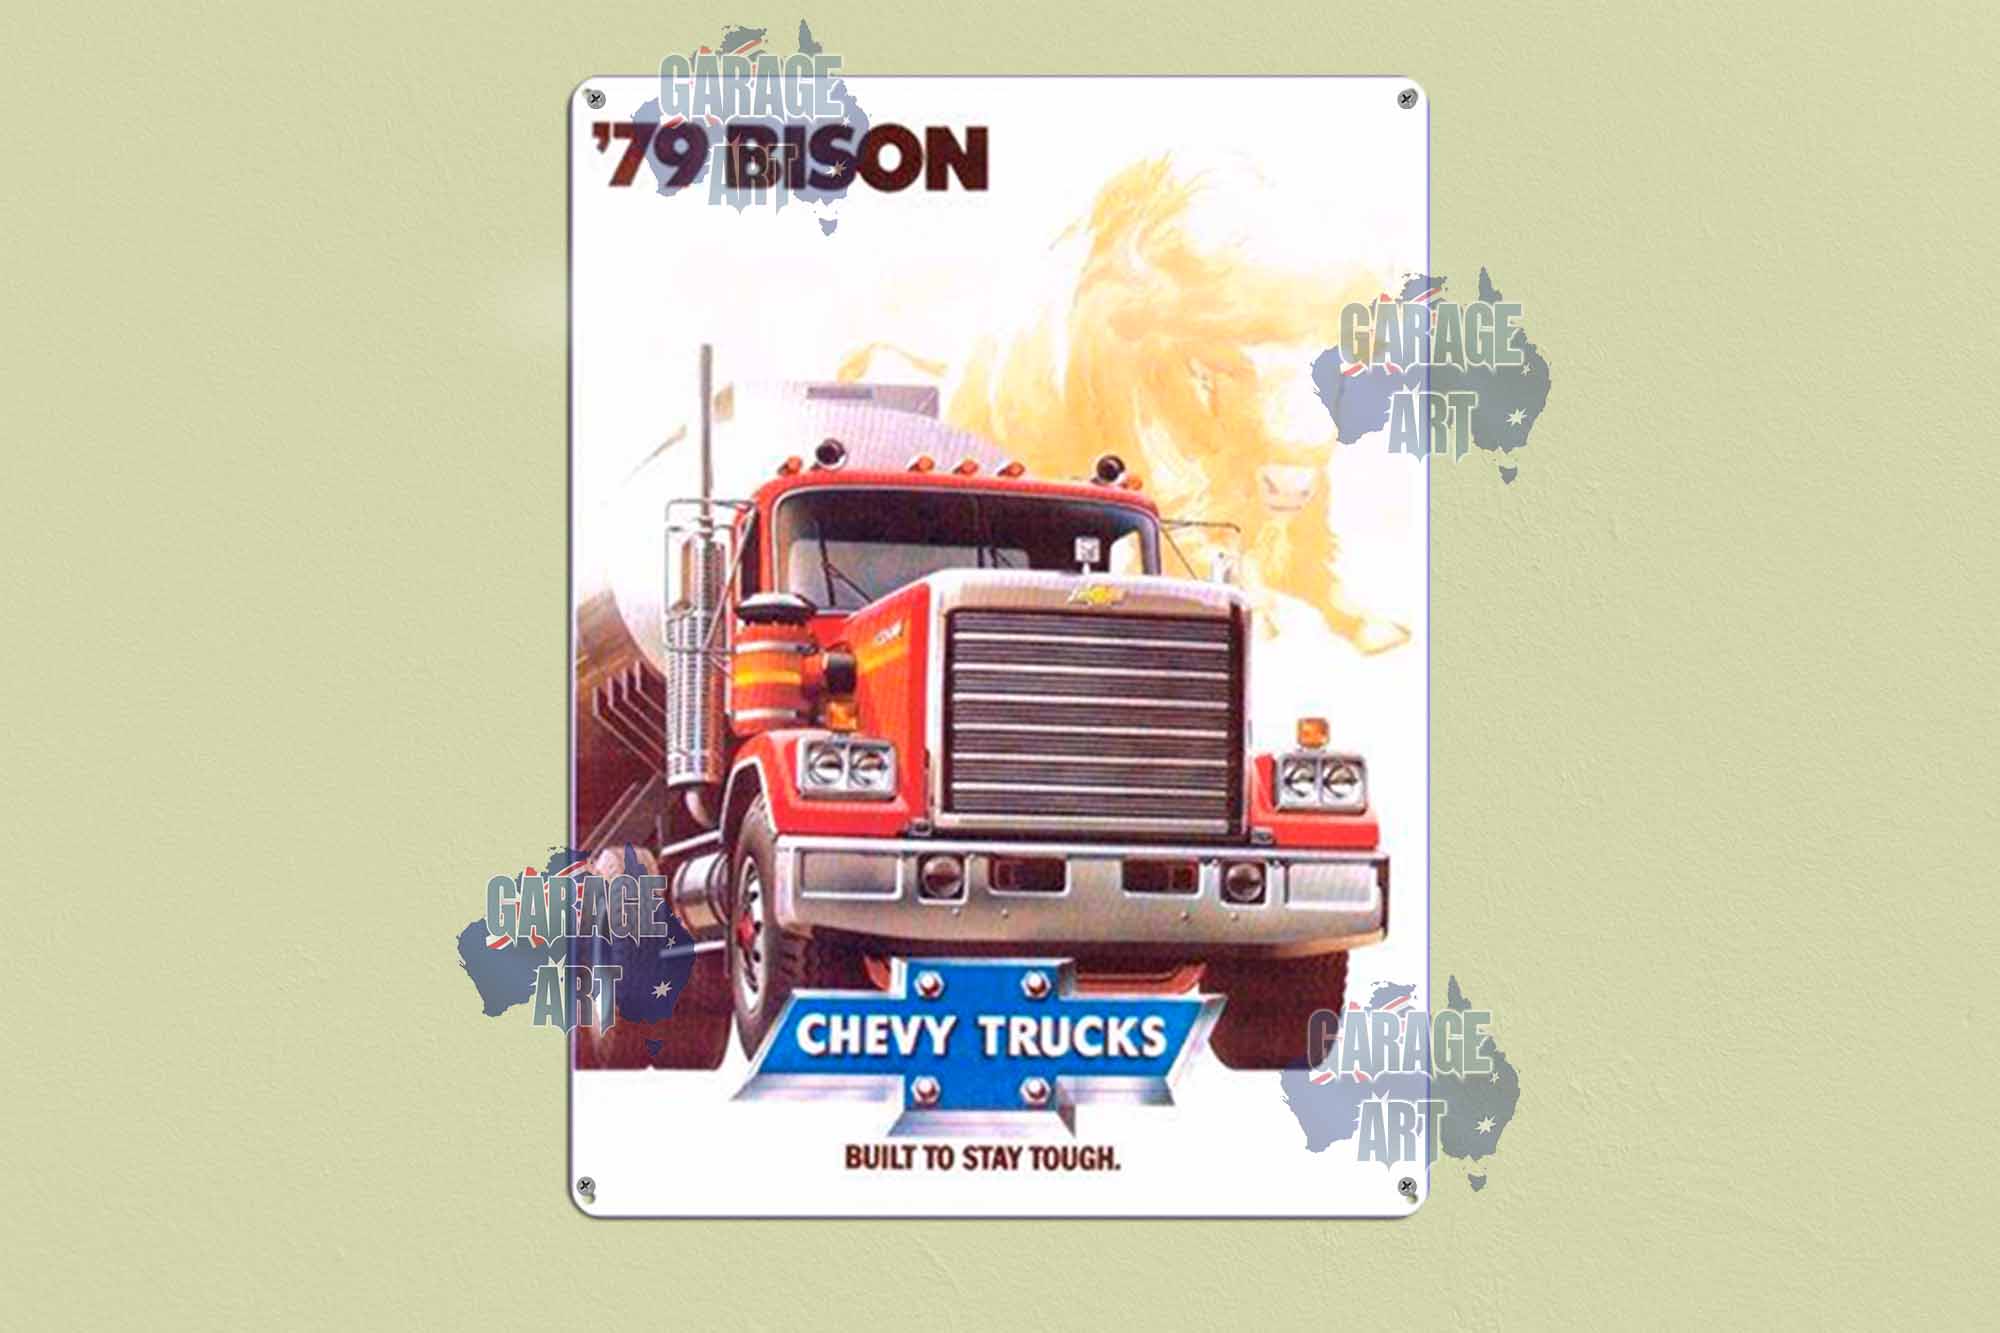 Chevrolet Truck the 1979 Bison Tin Sign freeshipping - garageartaustralia